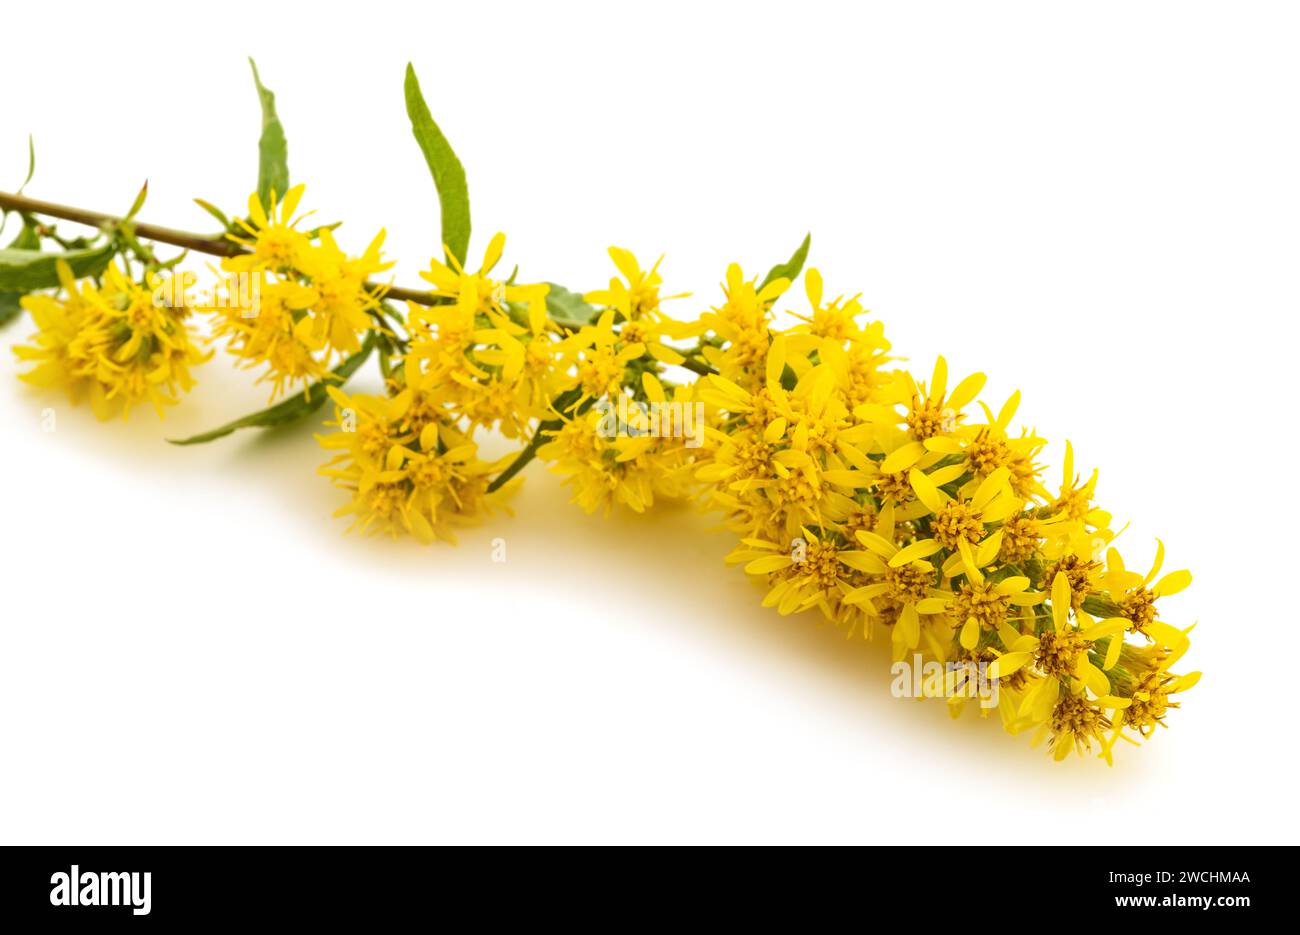 European goldenrod flowers isolated on white background Stock Photo